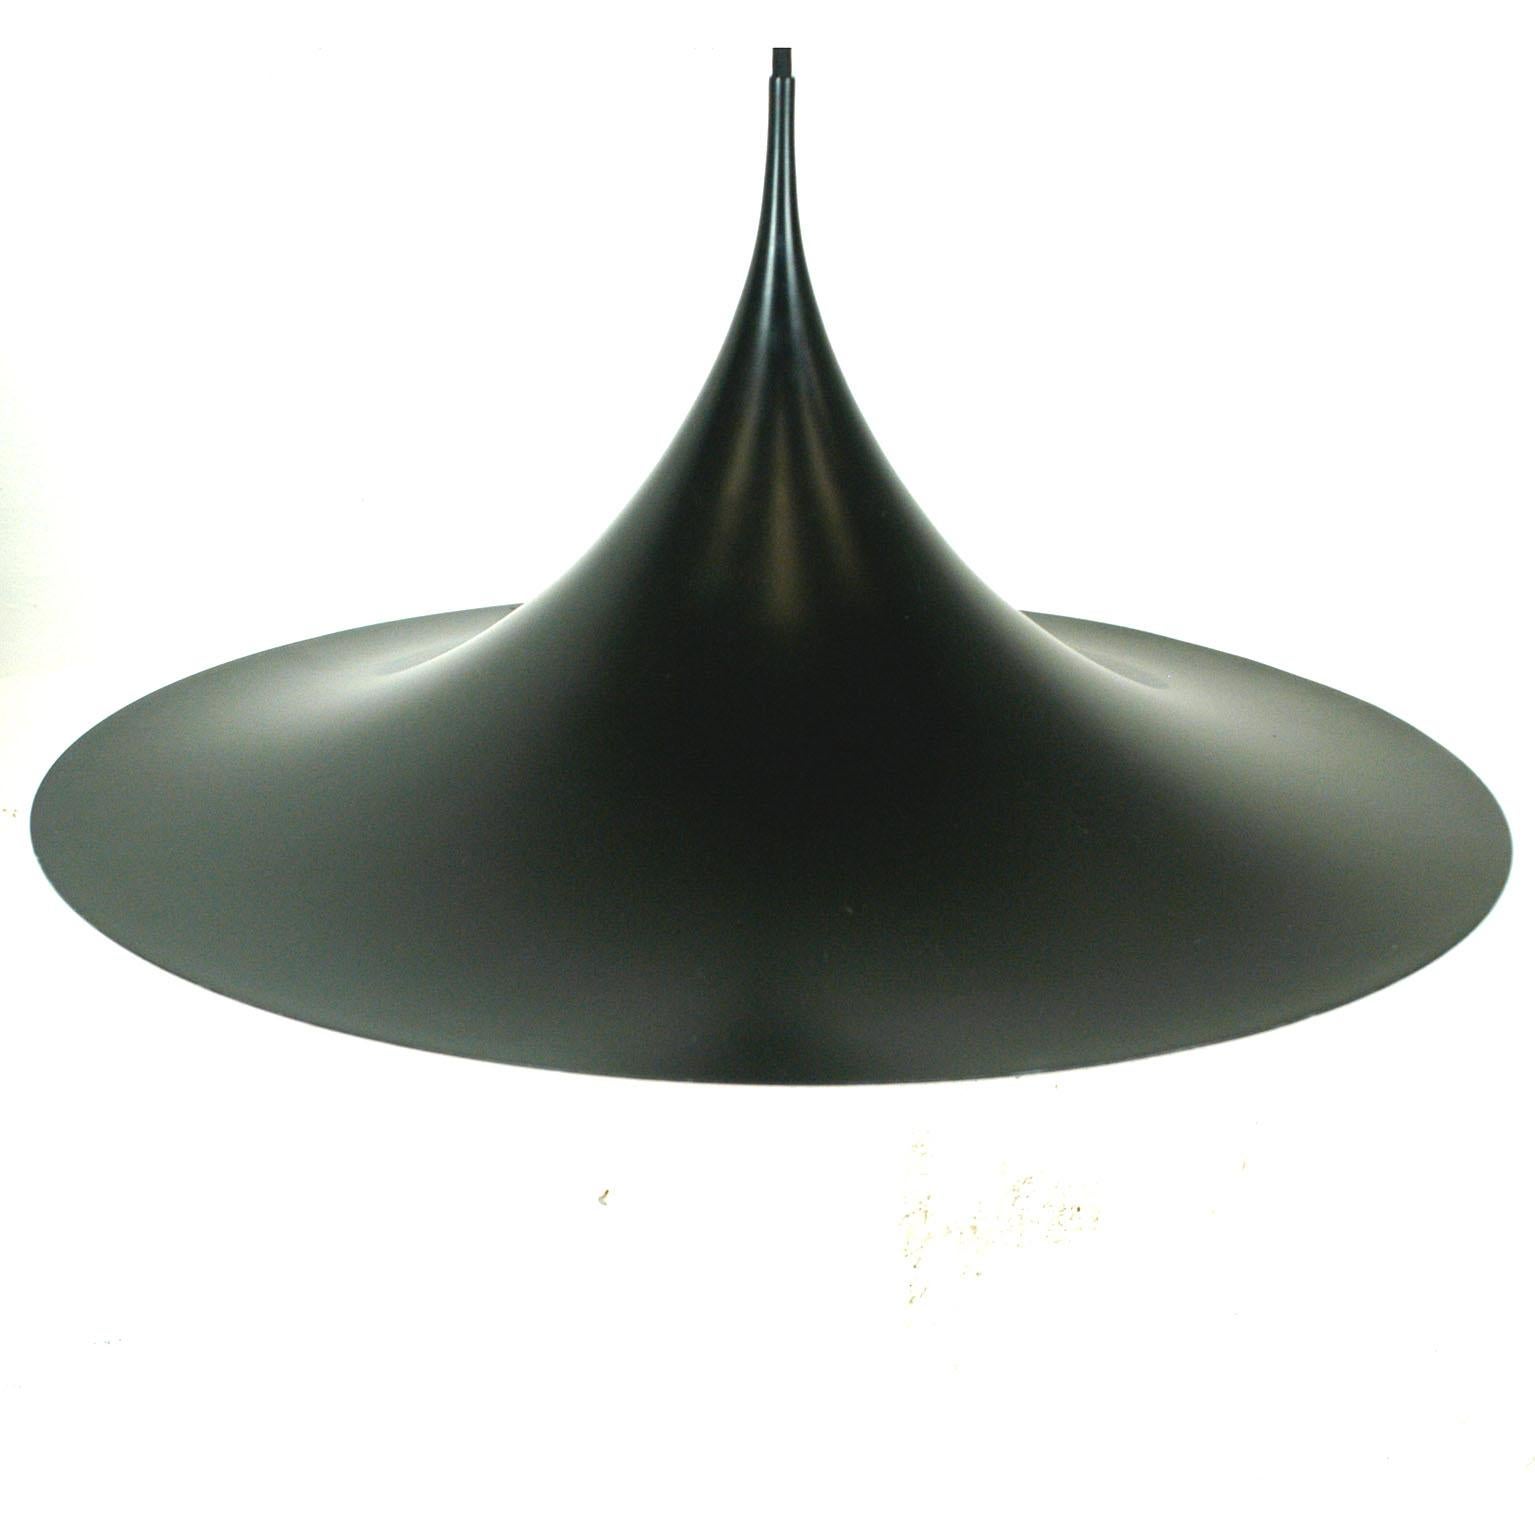 Large 1960s black Semi Pendant Lamp by Bonderup & Thorup for Fog & Mørup